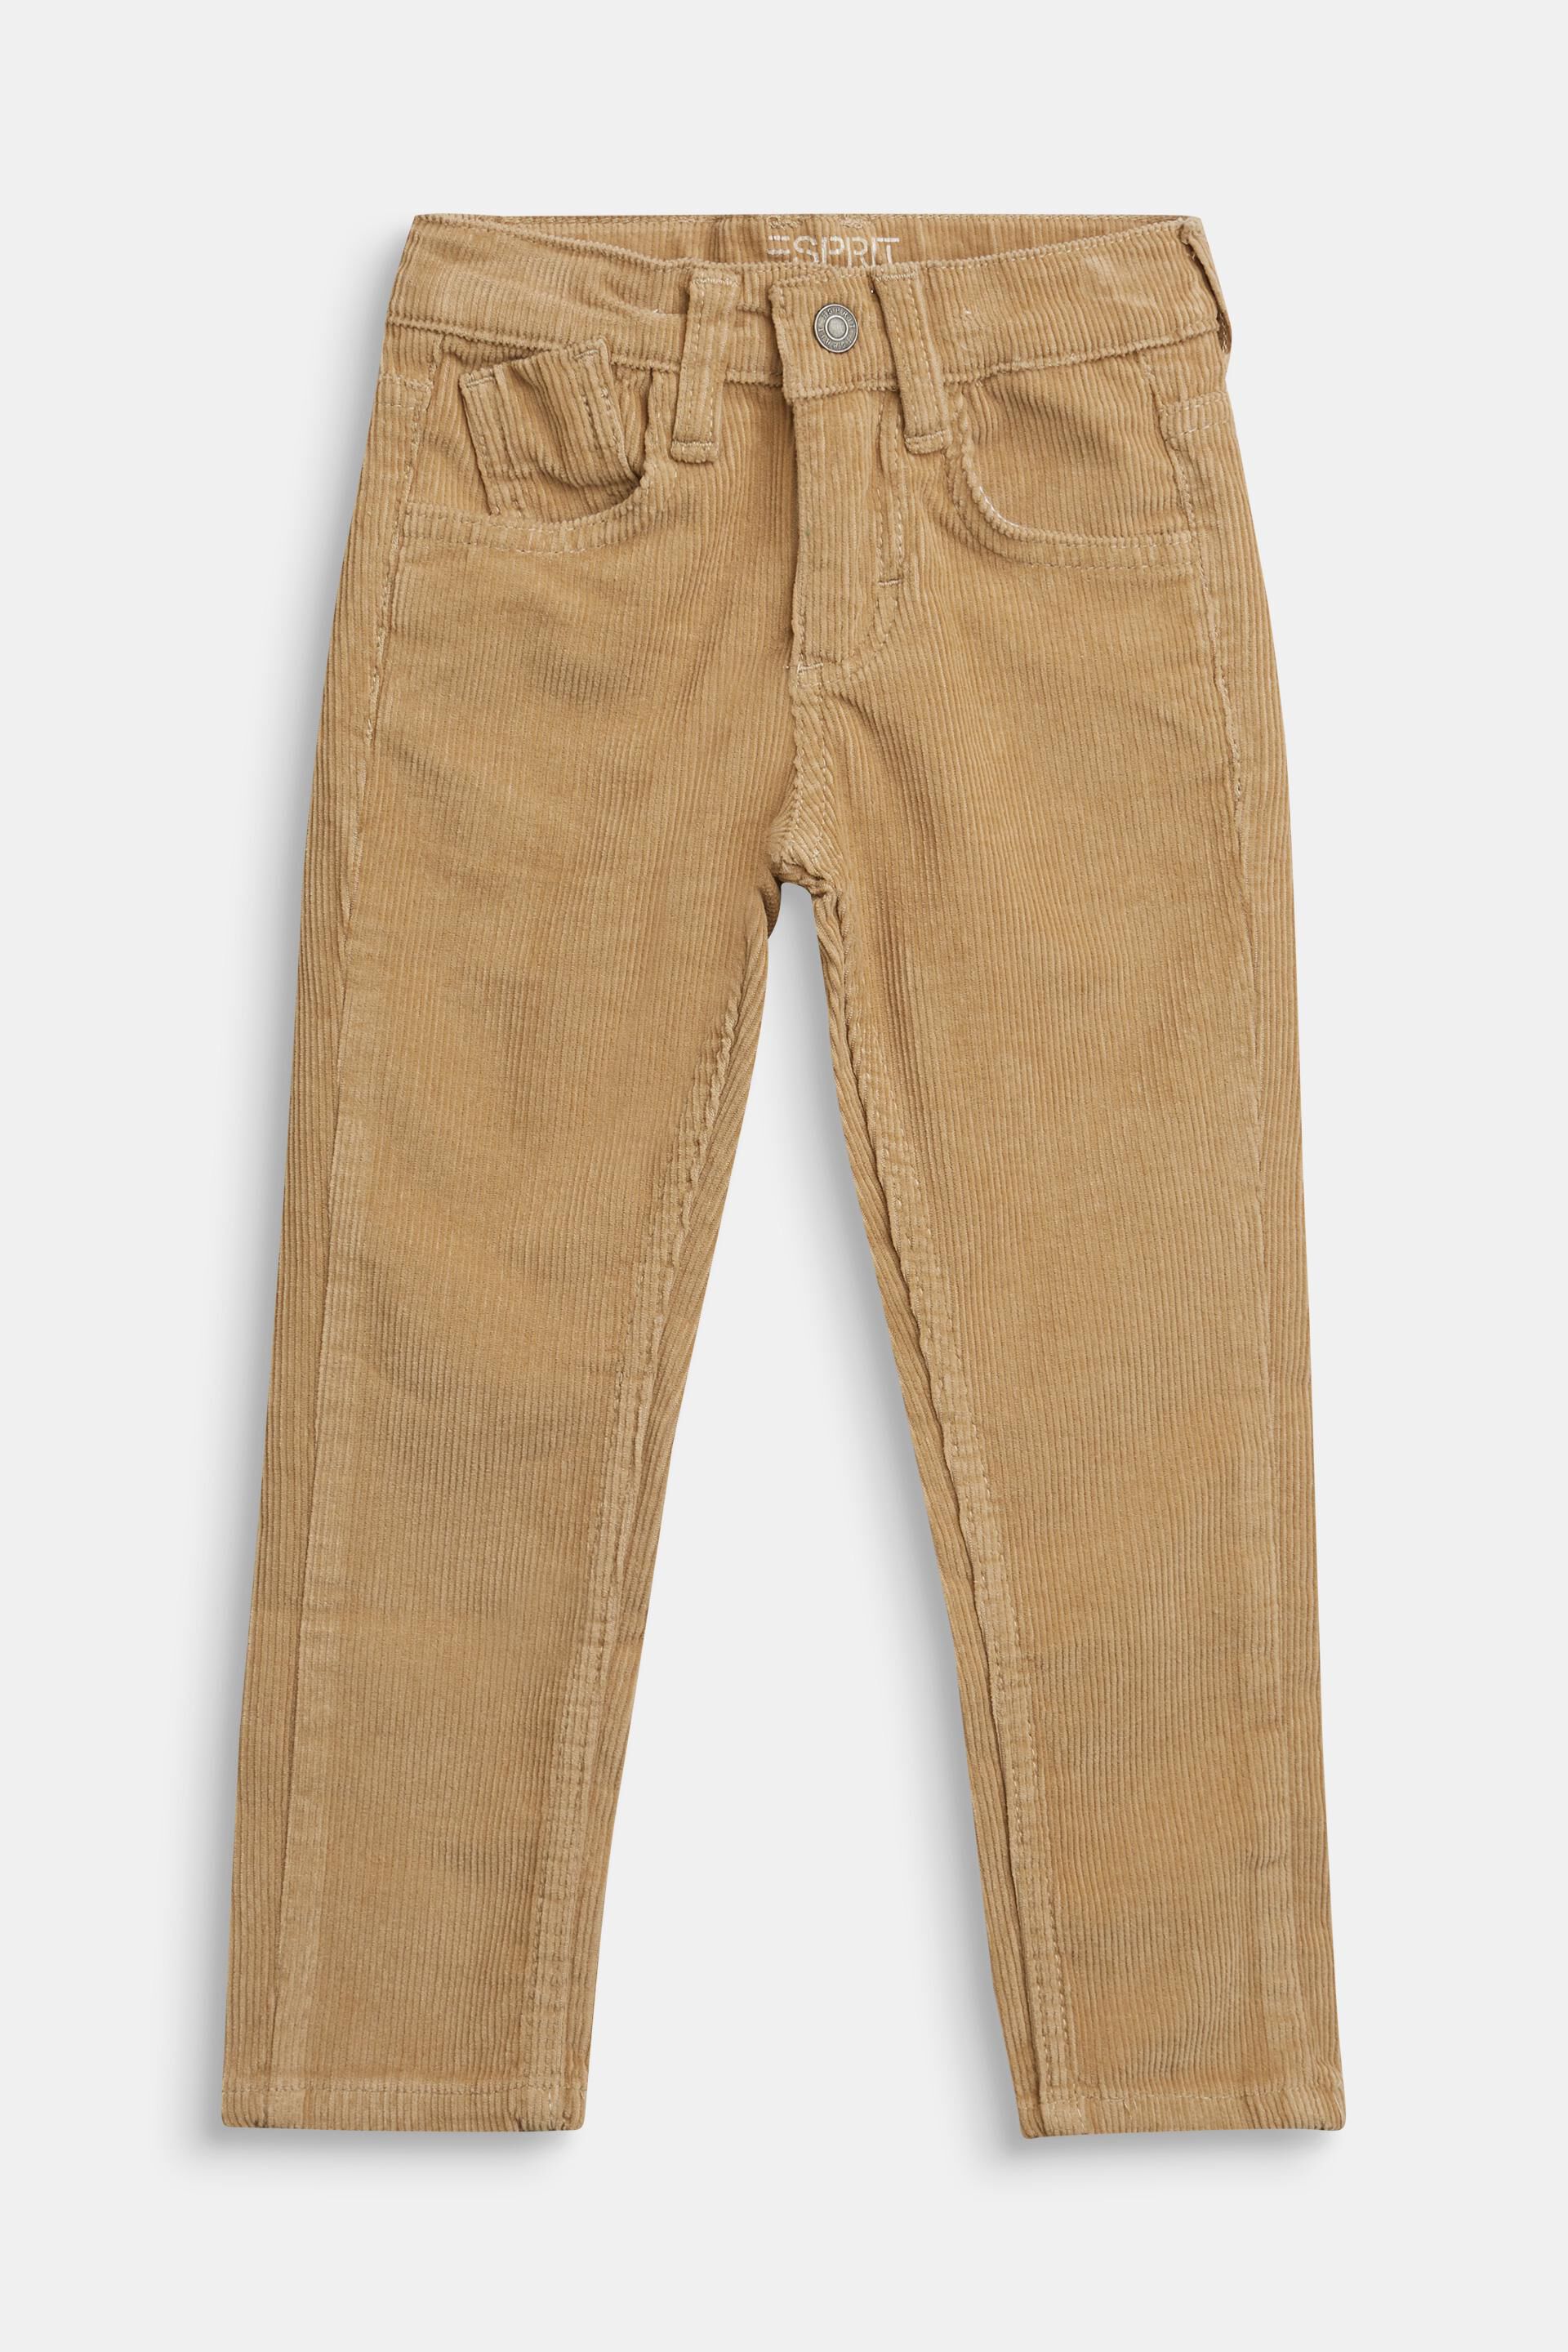 Vintage 90s y2k Esprit tan corduroy pants with suede... - Depop